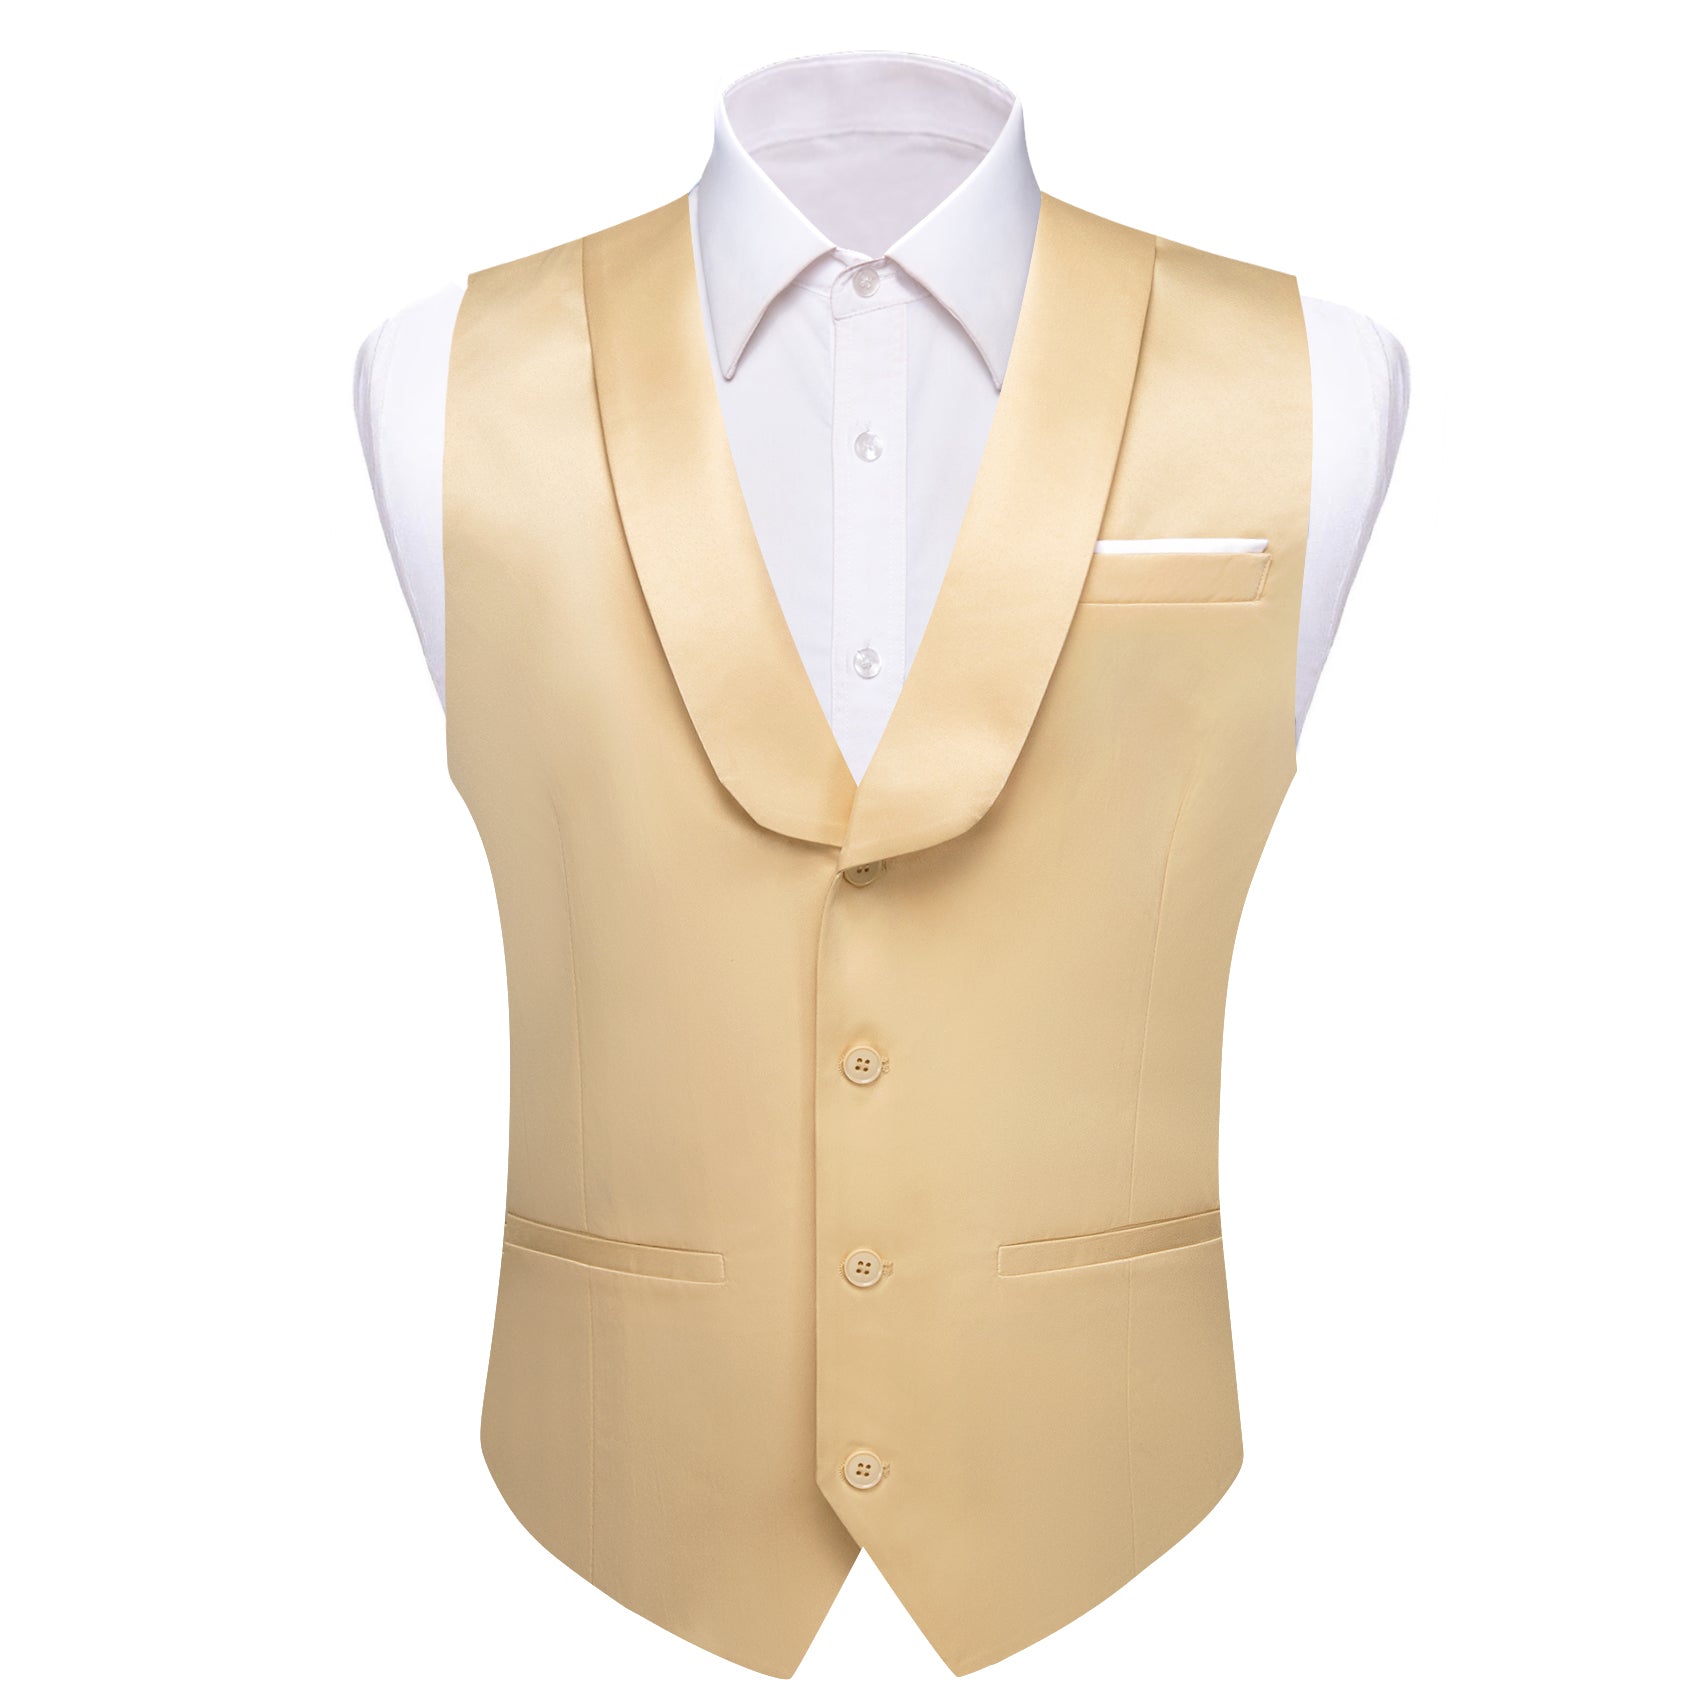 Barry.wang Novetly Gold Solid Vest Waistcoat Set